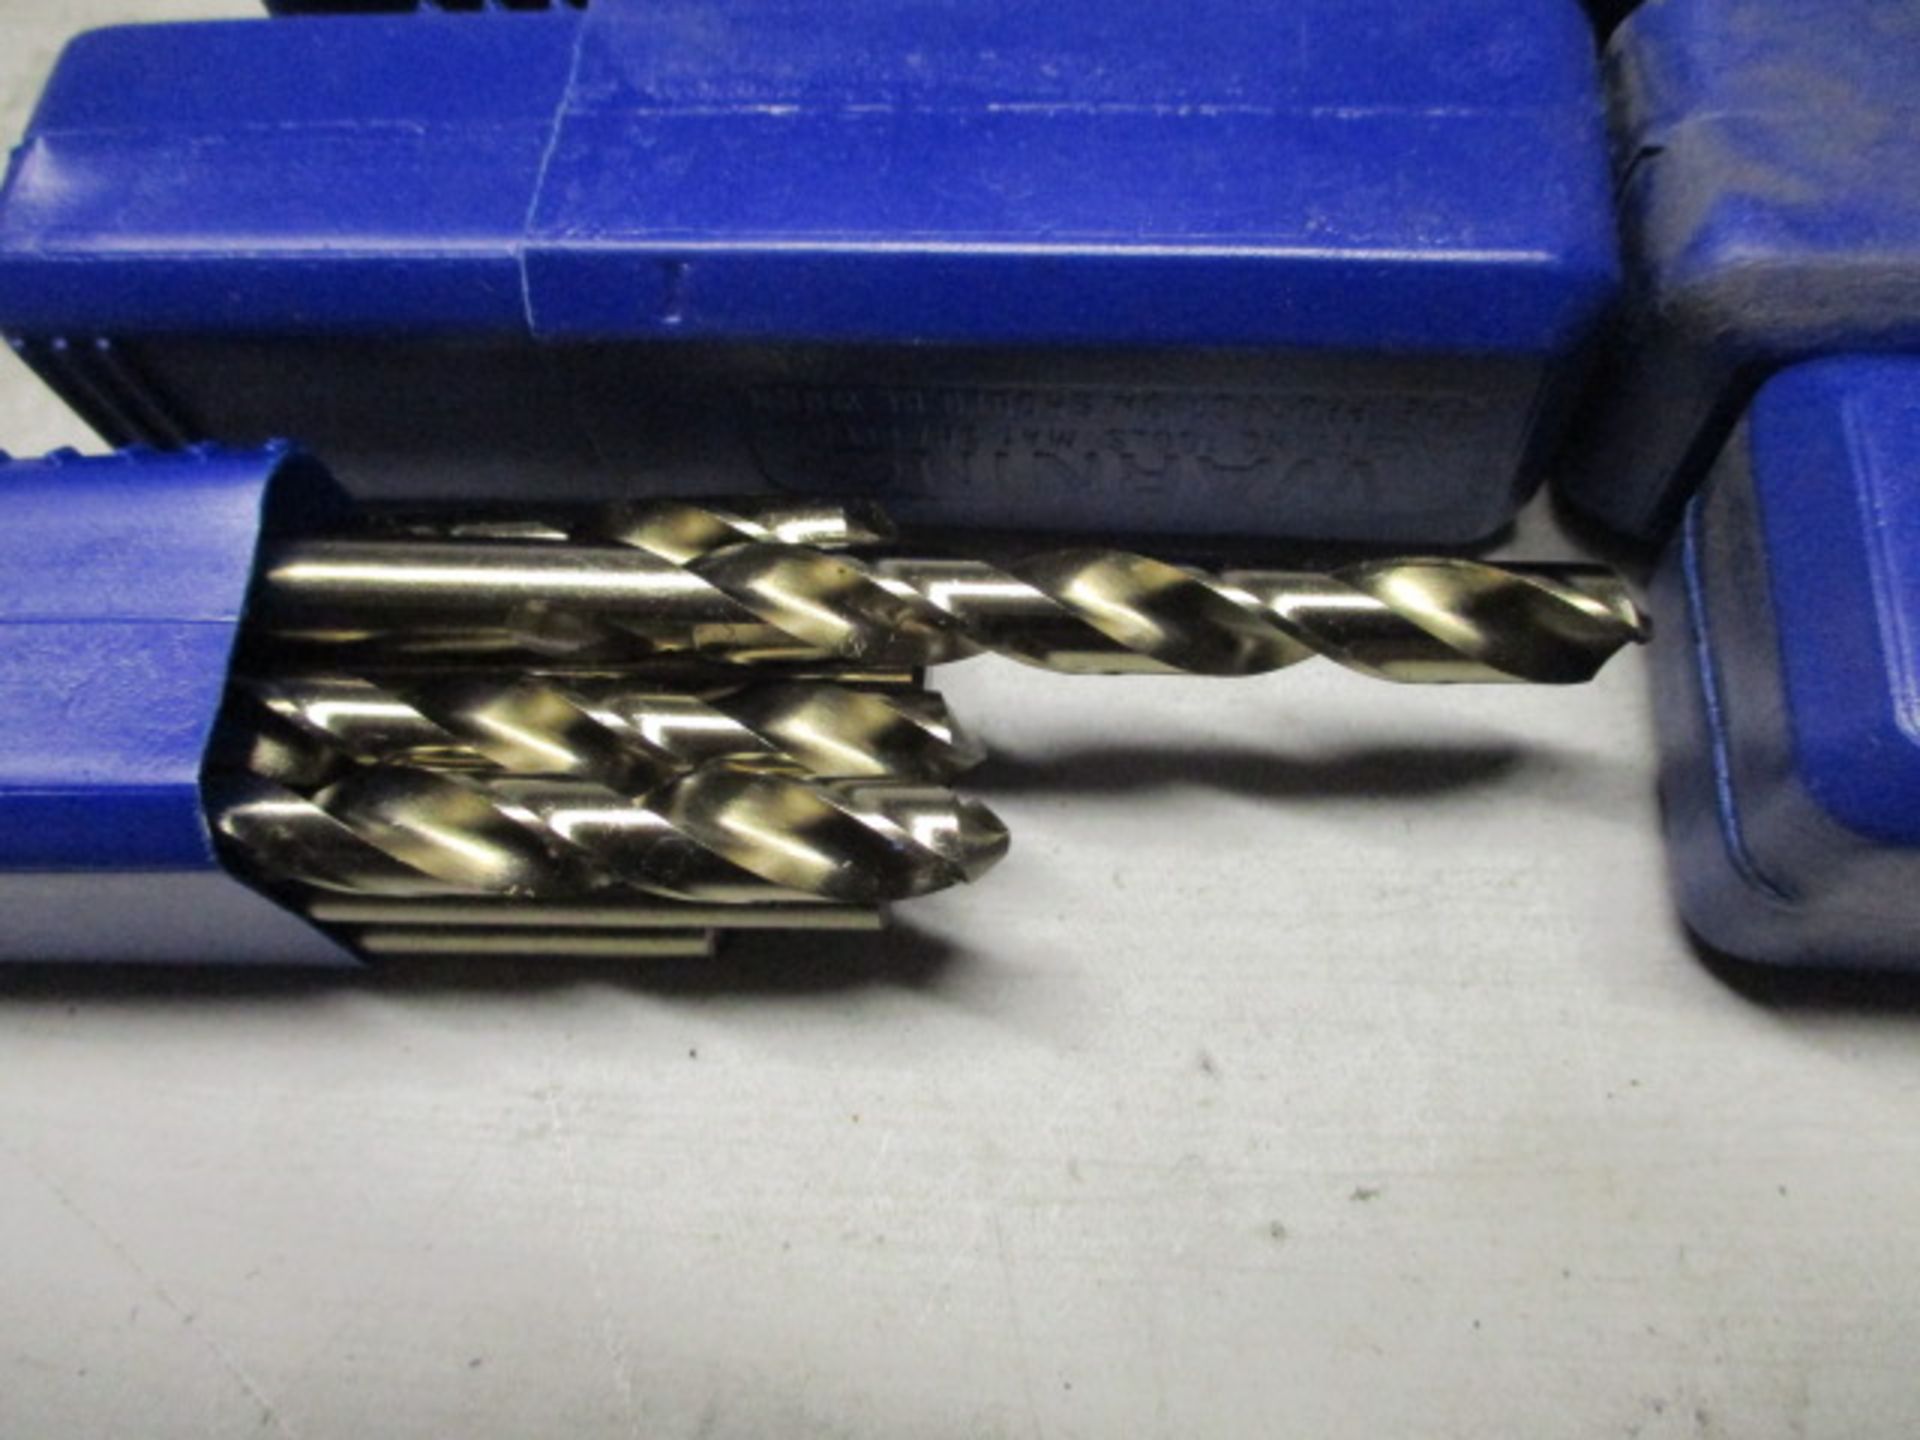 Cobalt Jobber Drills, Ground Flute (Unused) - Image 2 of 3